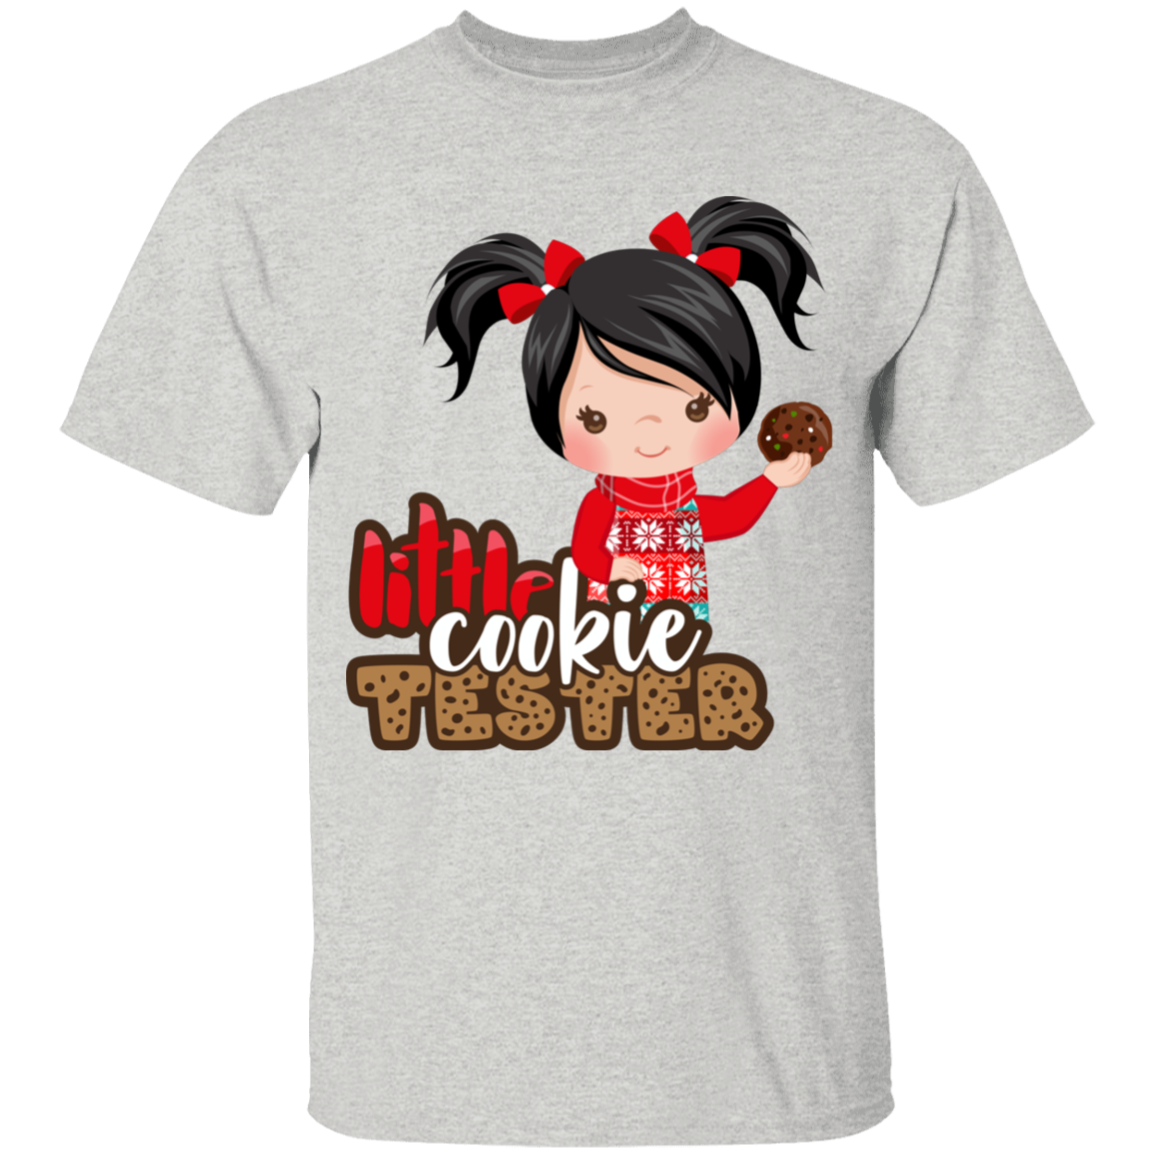 Little Cookie Tester Black Hair Girl 100% Cotton T-Shirt